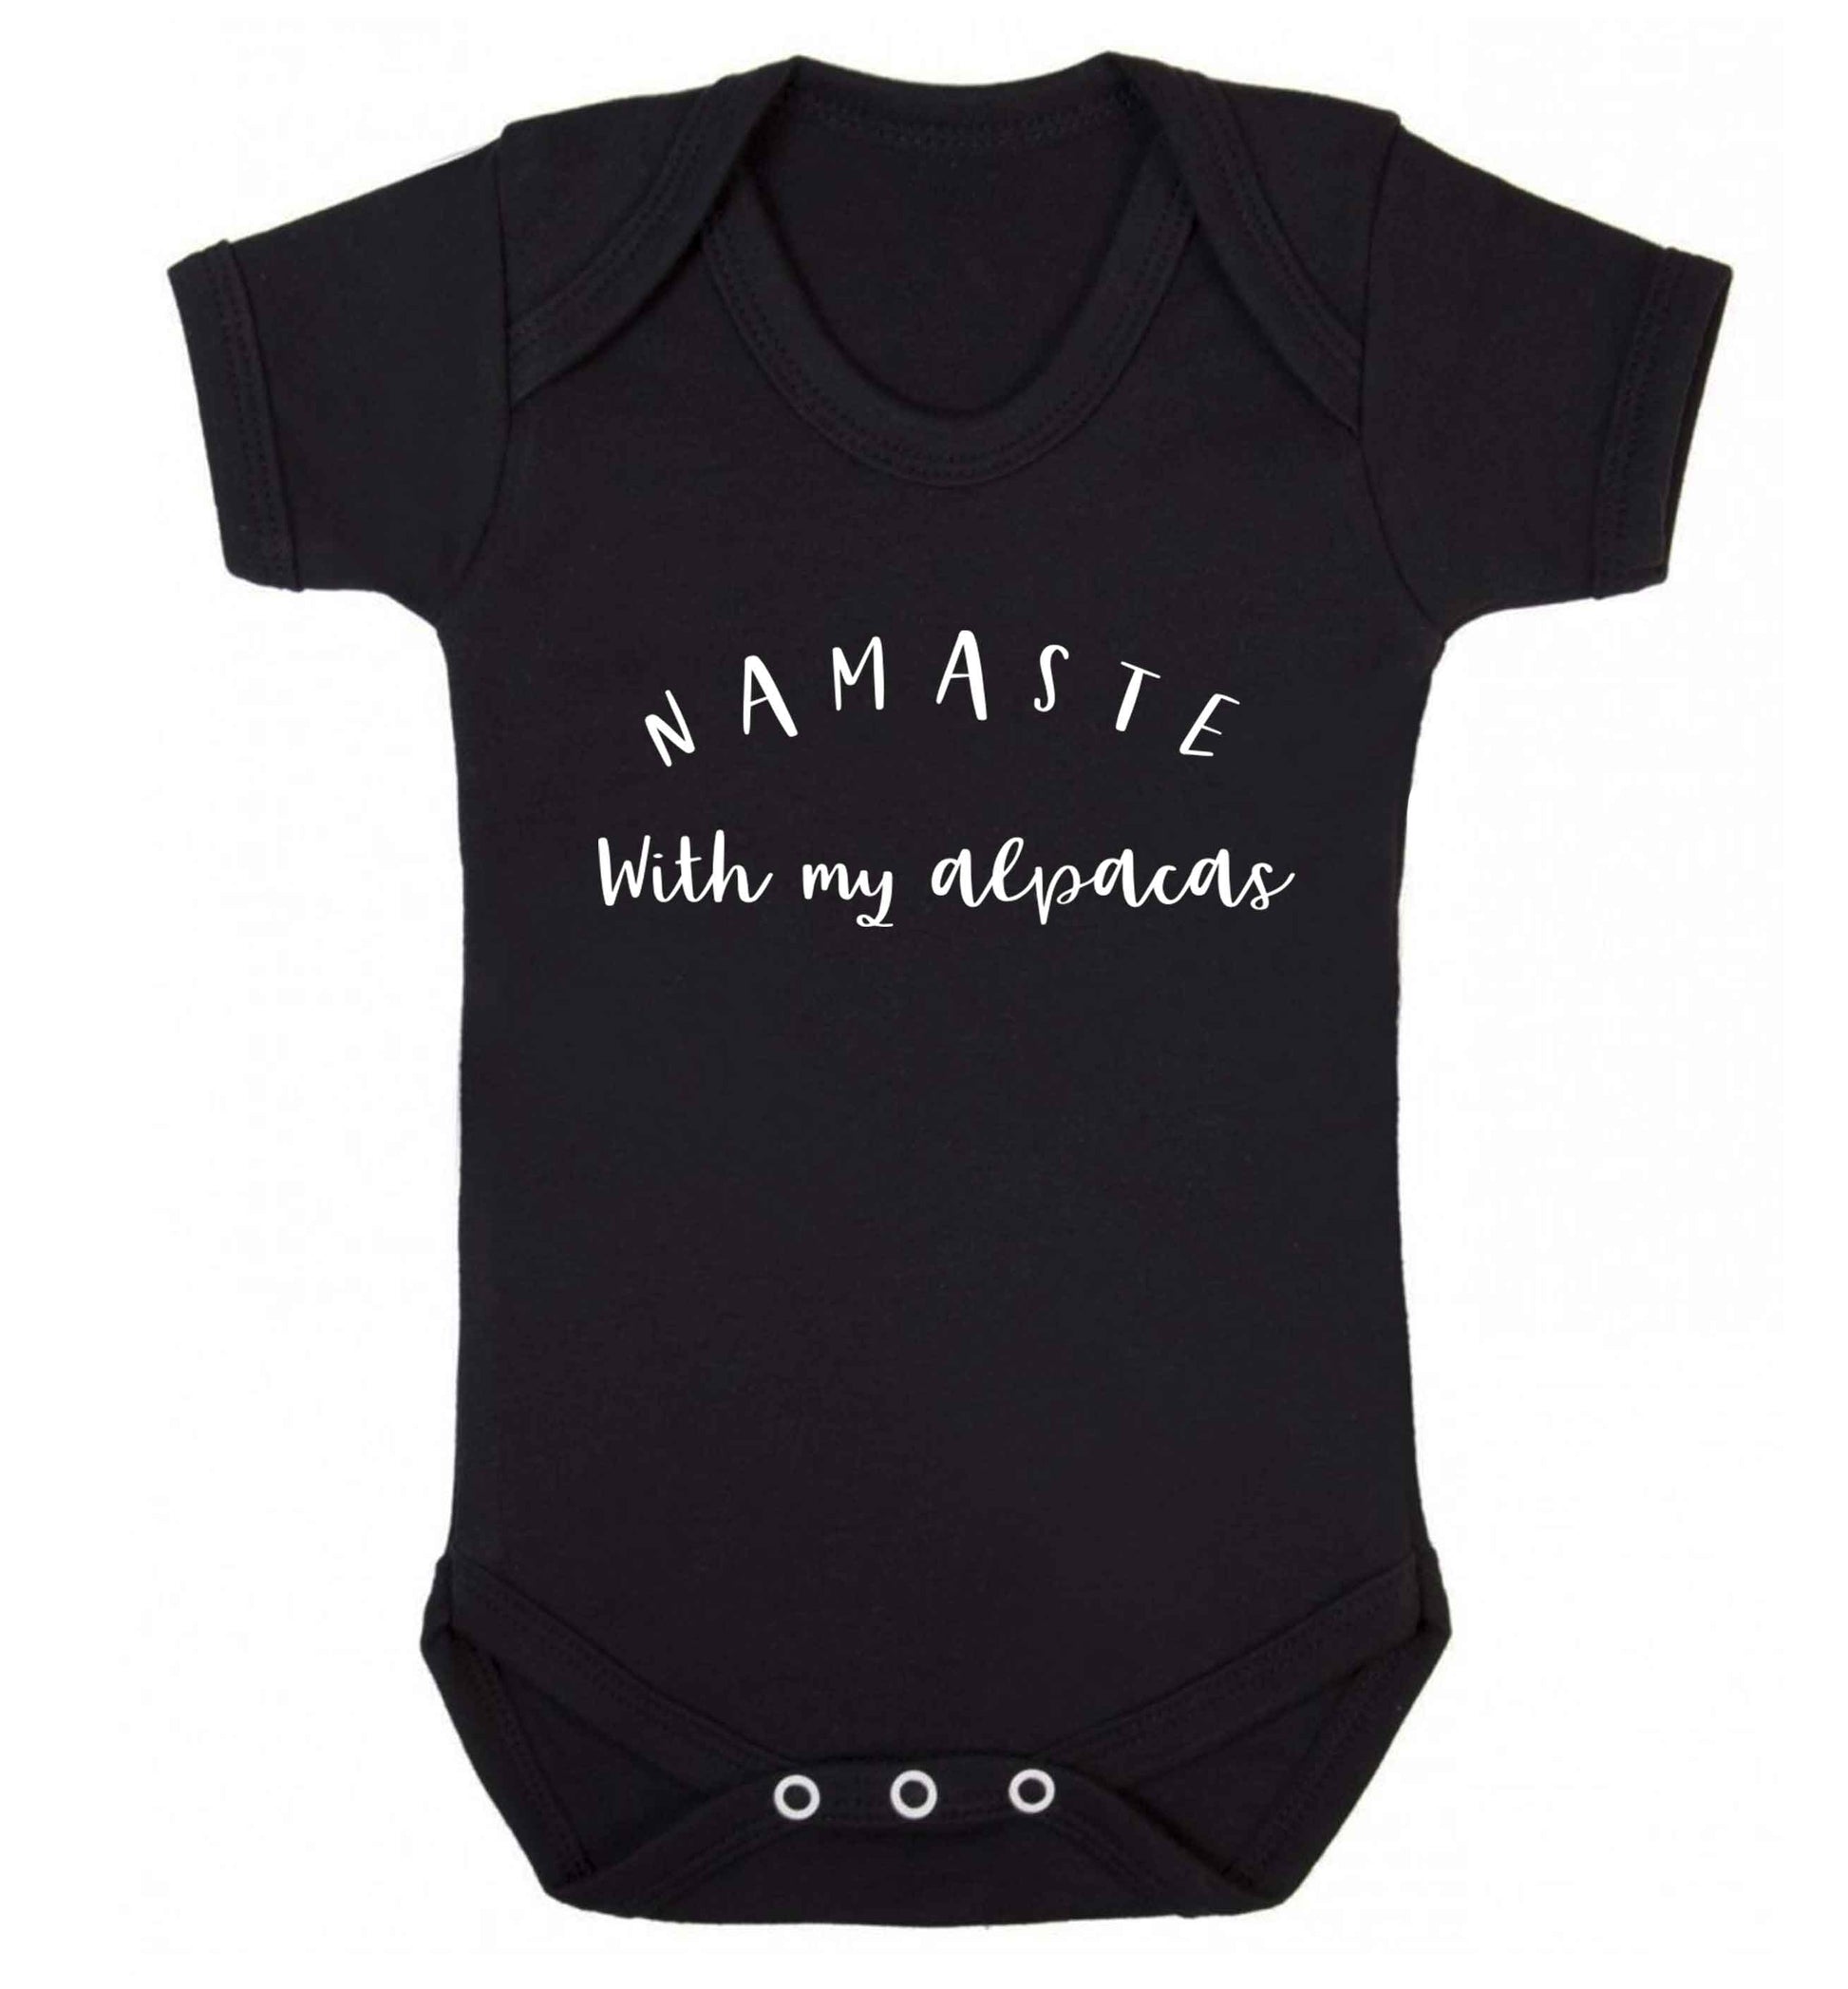 Namaste with my alpacas Baby Vest black 18-24 months